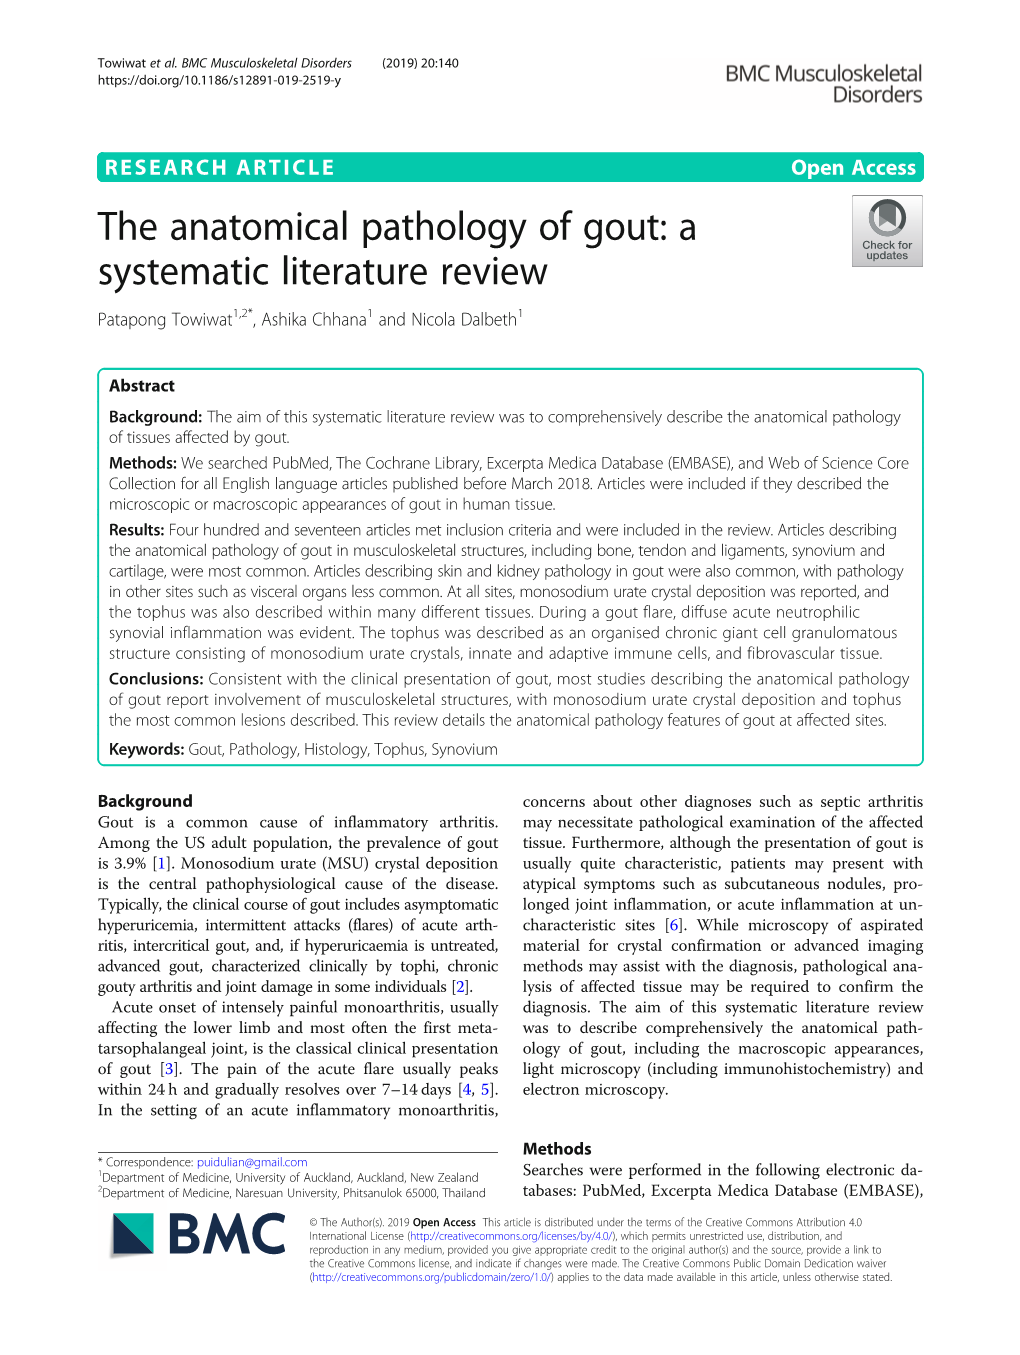 The Anatomical Pathology of Gout: a Systematic Literature Review Patapong Towiwat1,2*, Ashika Chhana1 and Nicola Dalbeth1